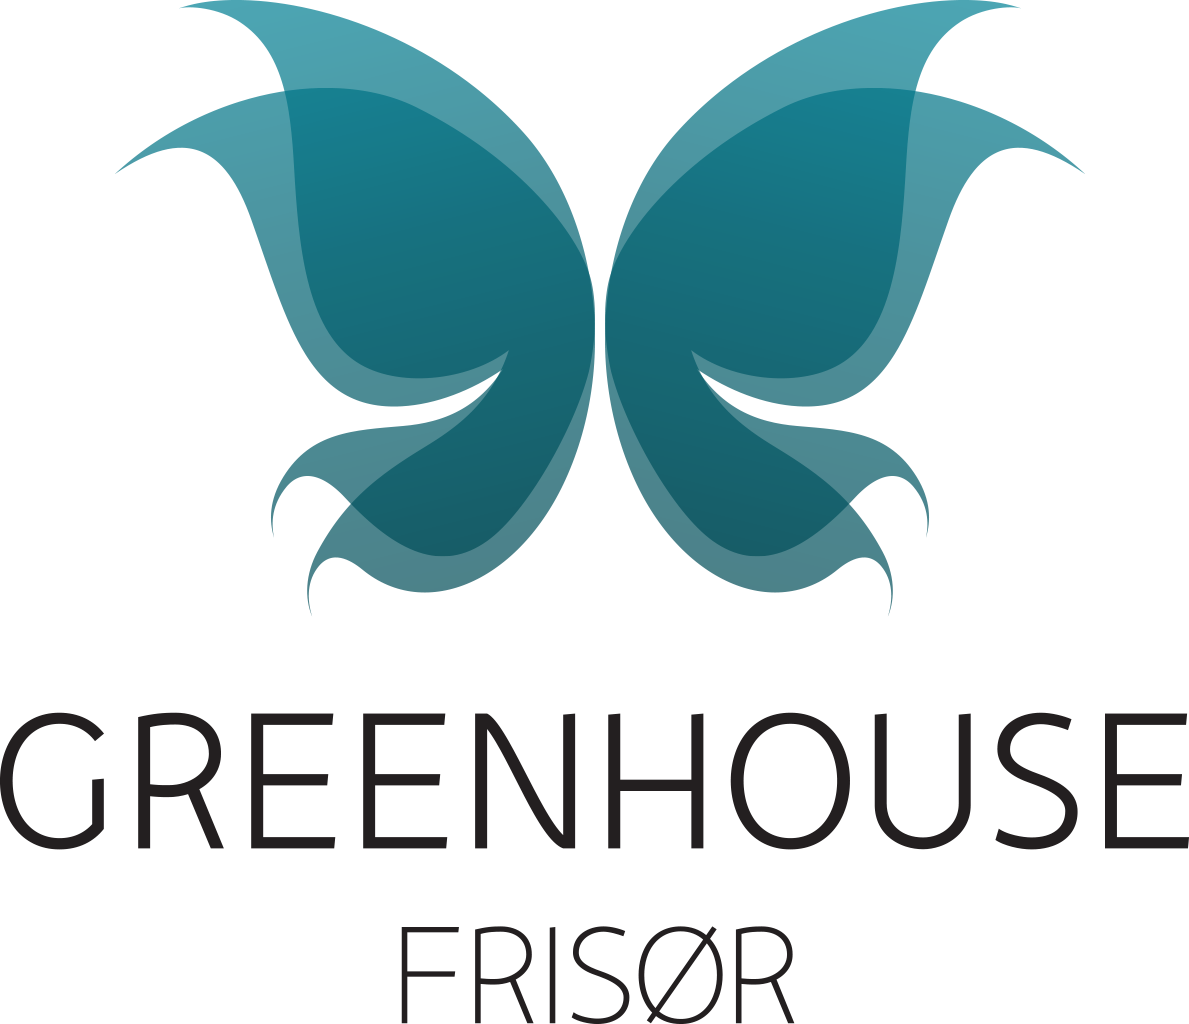 Greenhouse Frisør Greenhouse Frisør - Philosophy (1189x1024)